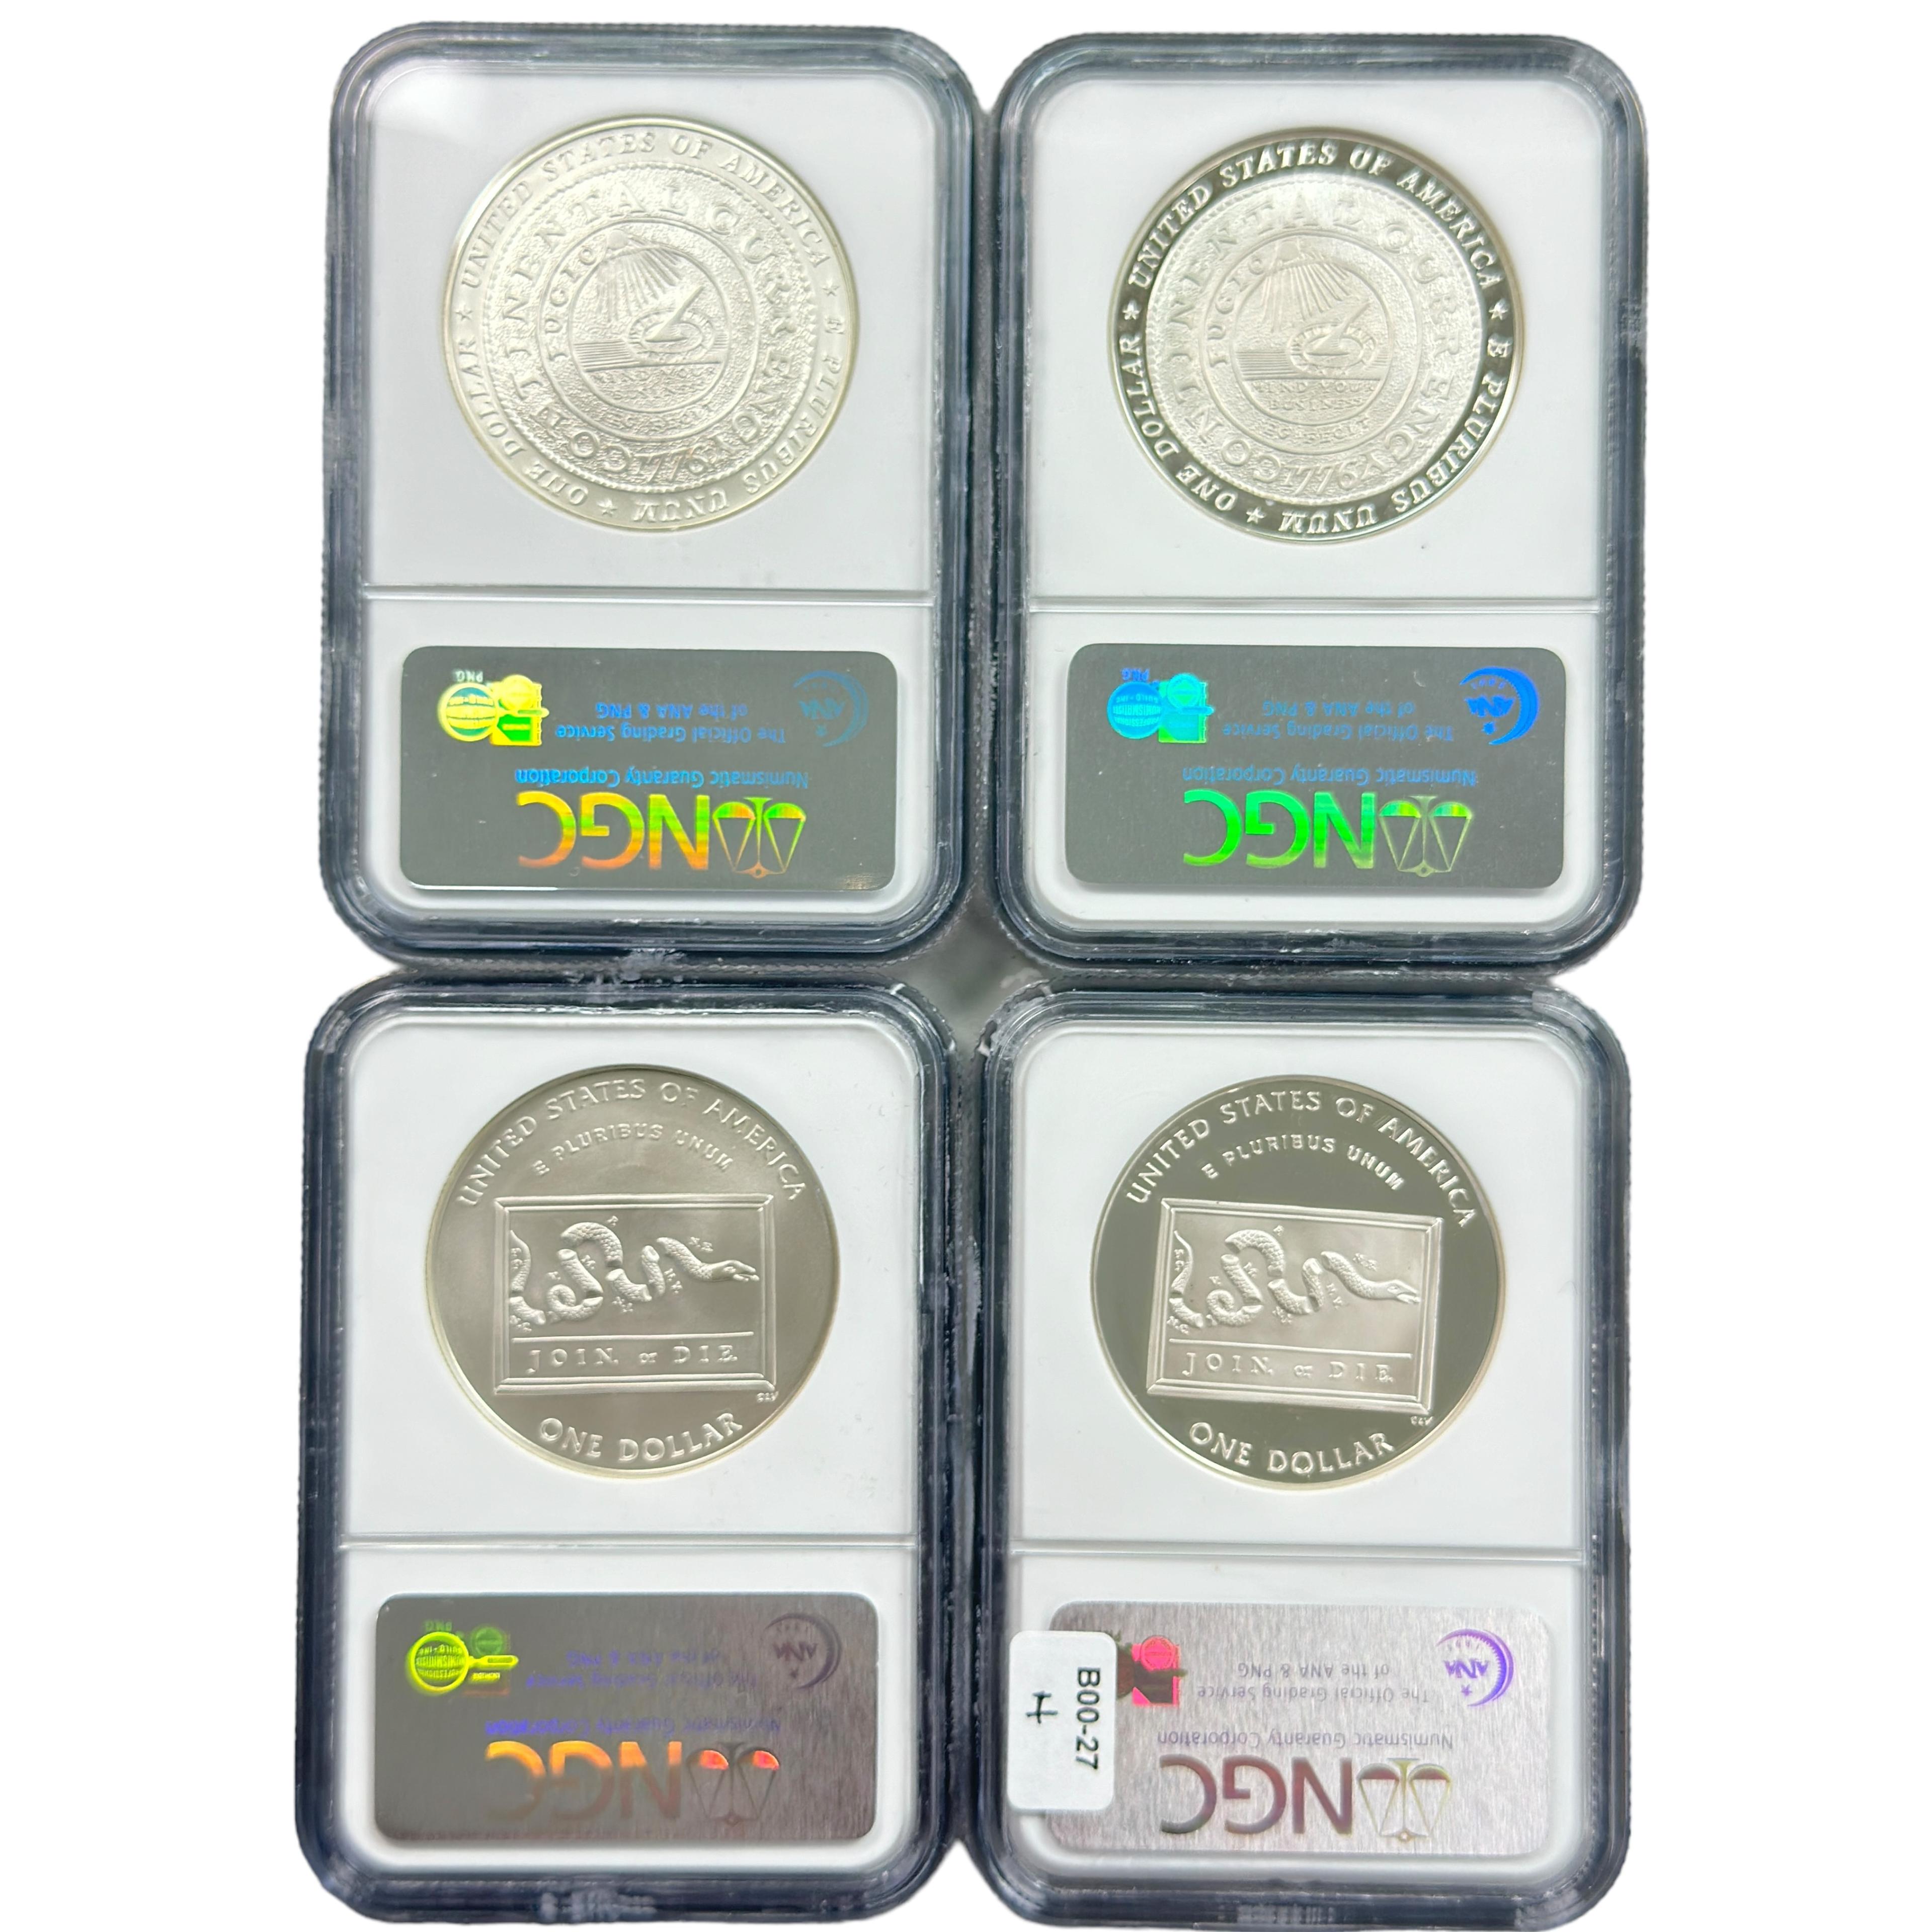 Lot of all 4 certified 2006 U.S. Ben Franklin commemorative silver dollars